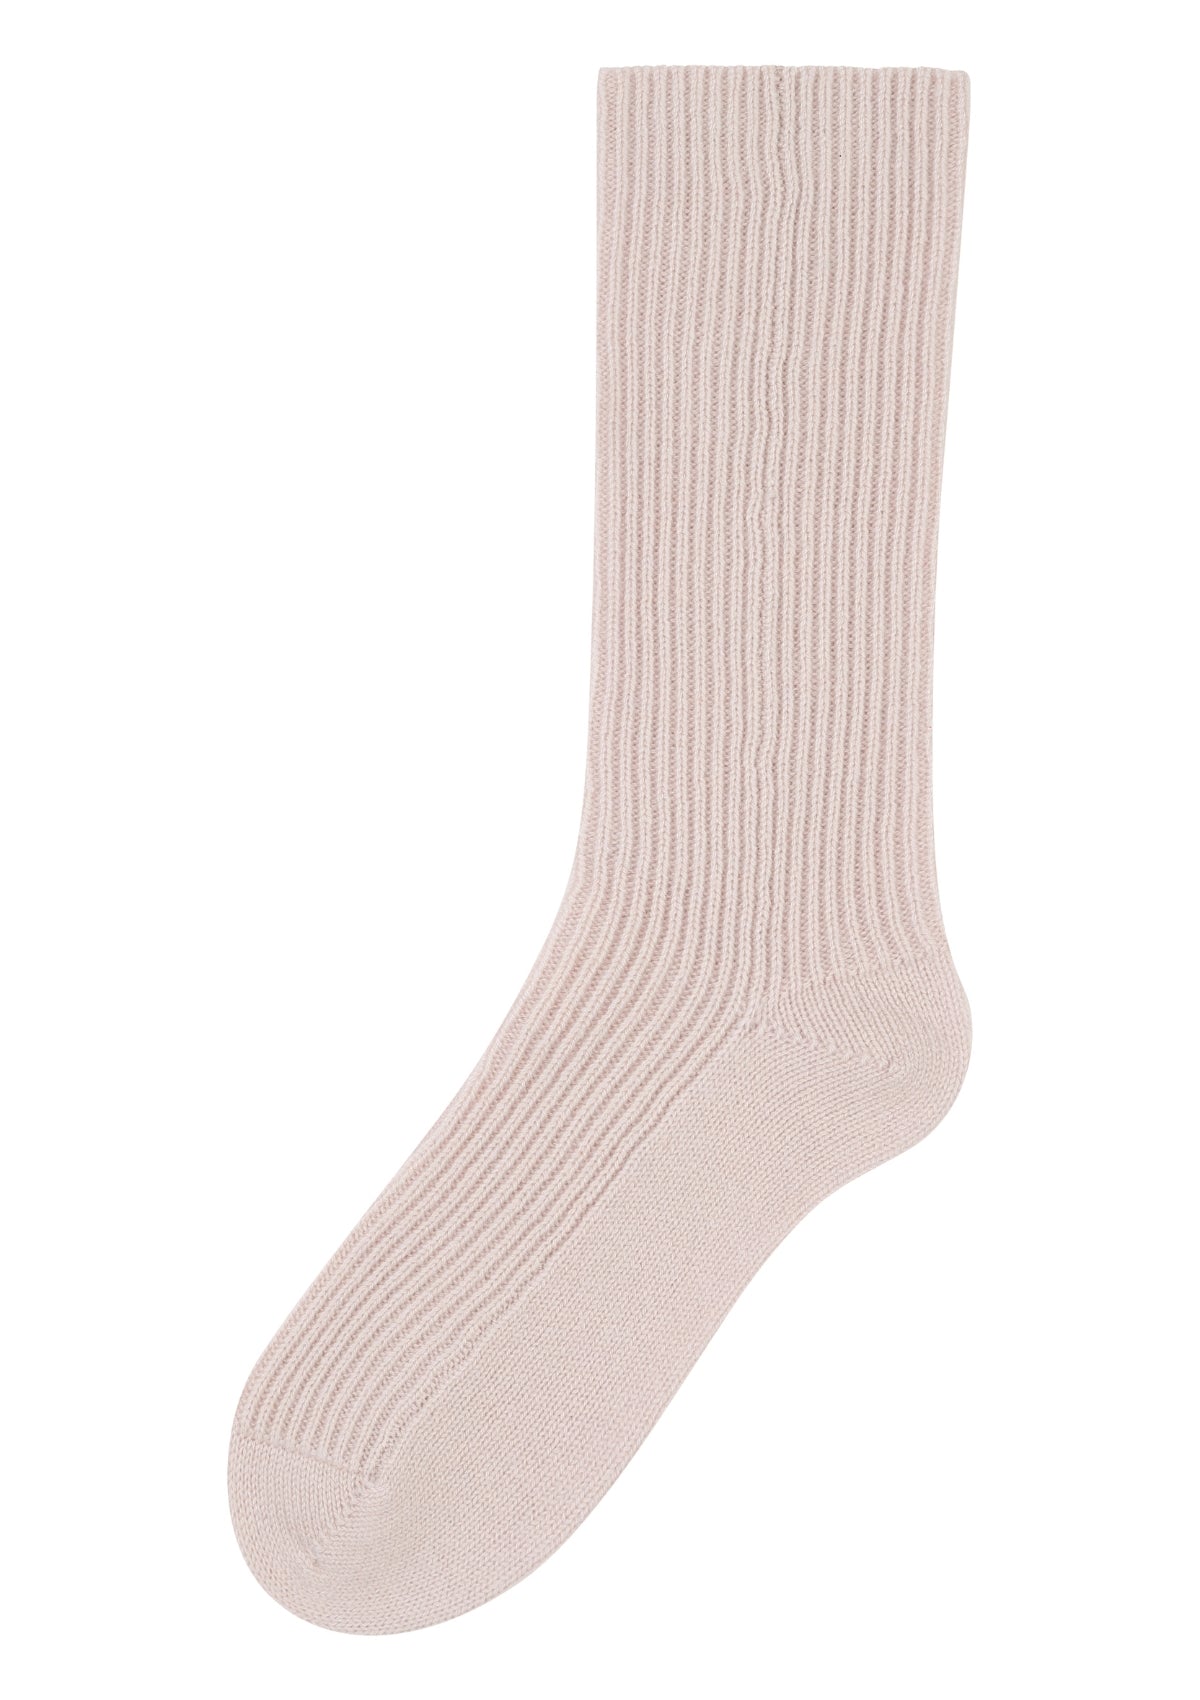 Cashmere Sock in Ballet Pink